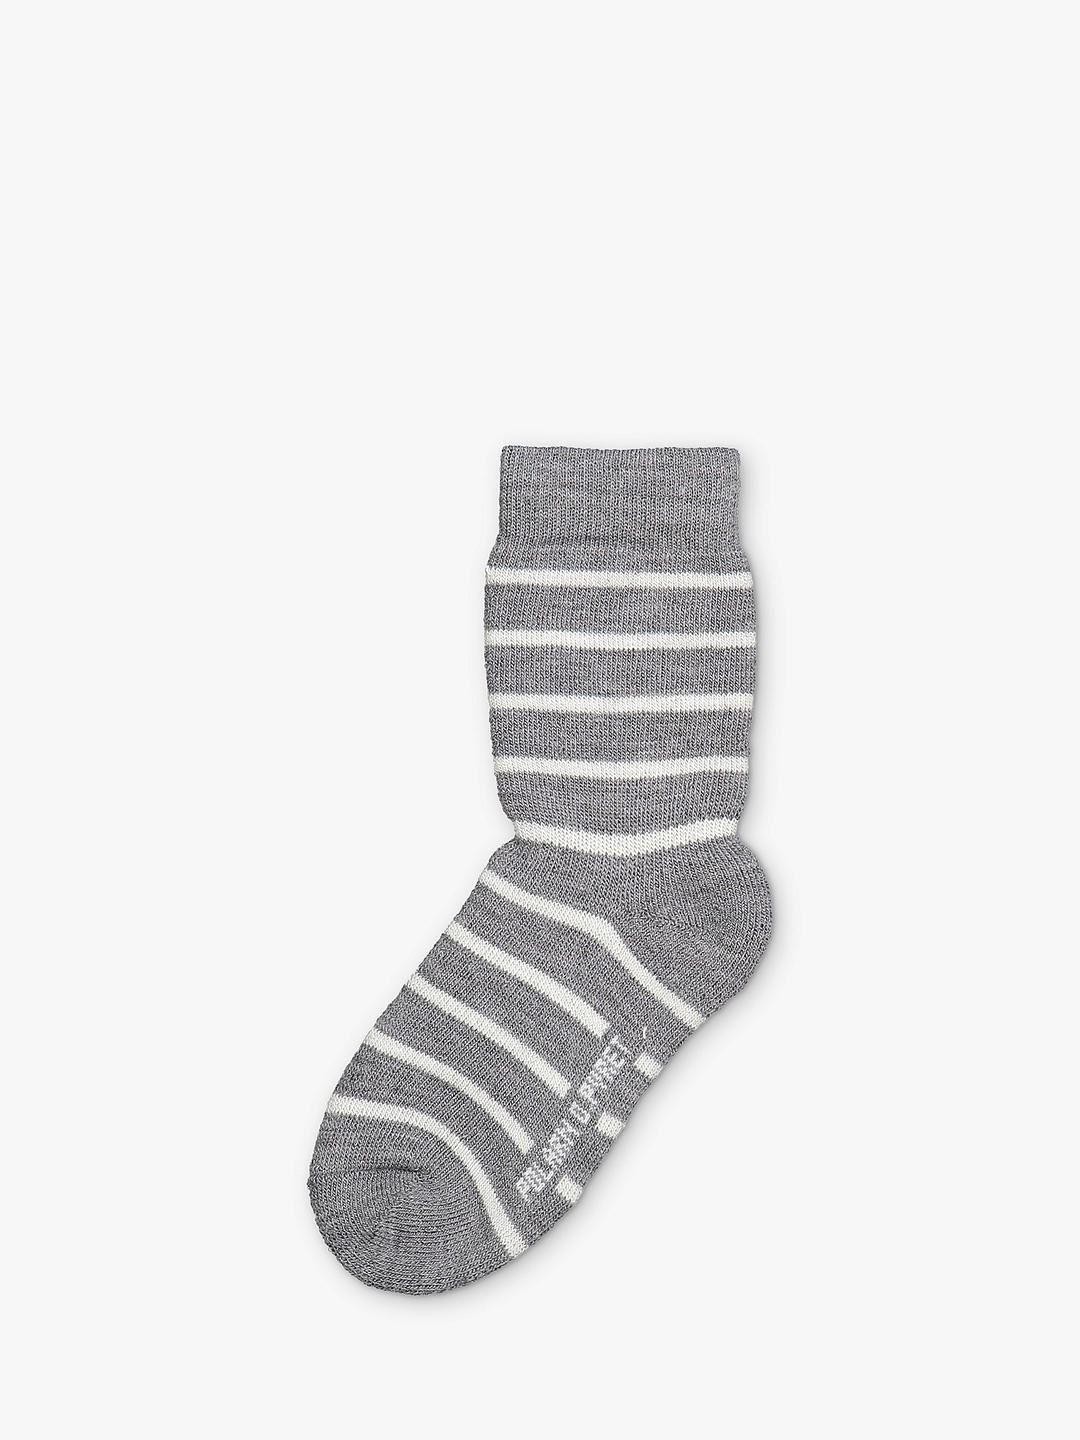 Polarn O. Pyret Kids' Terry Wool Socks, Grey